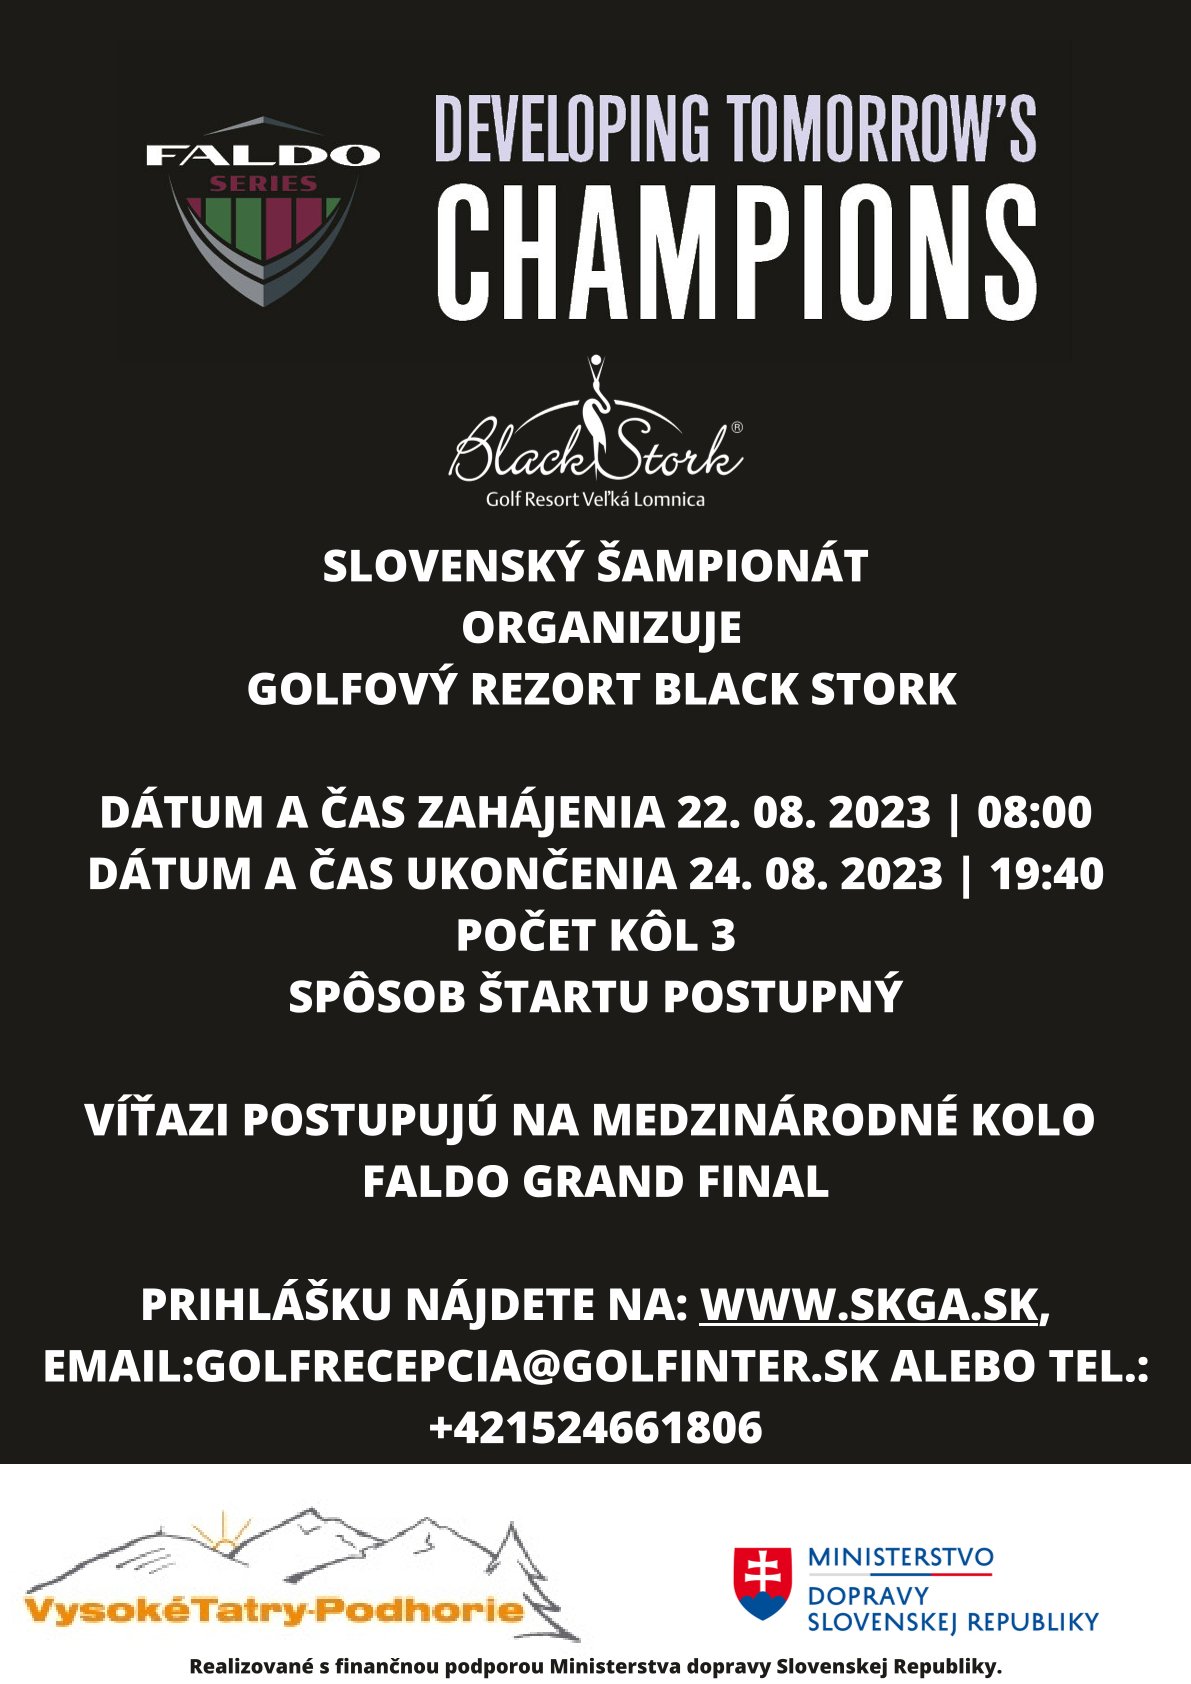 FALDO-Series-Slovakia-Championship-golf-2023-Black-Stork-Velka-Lomnica